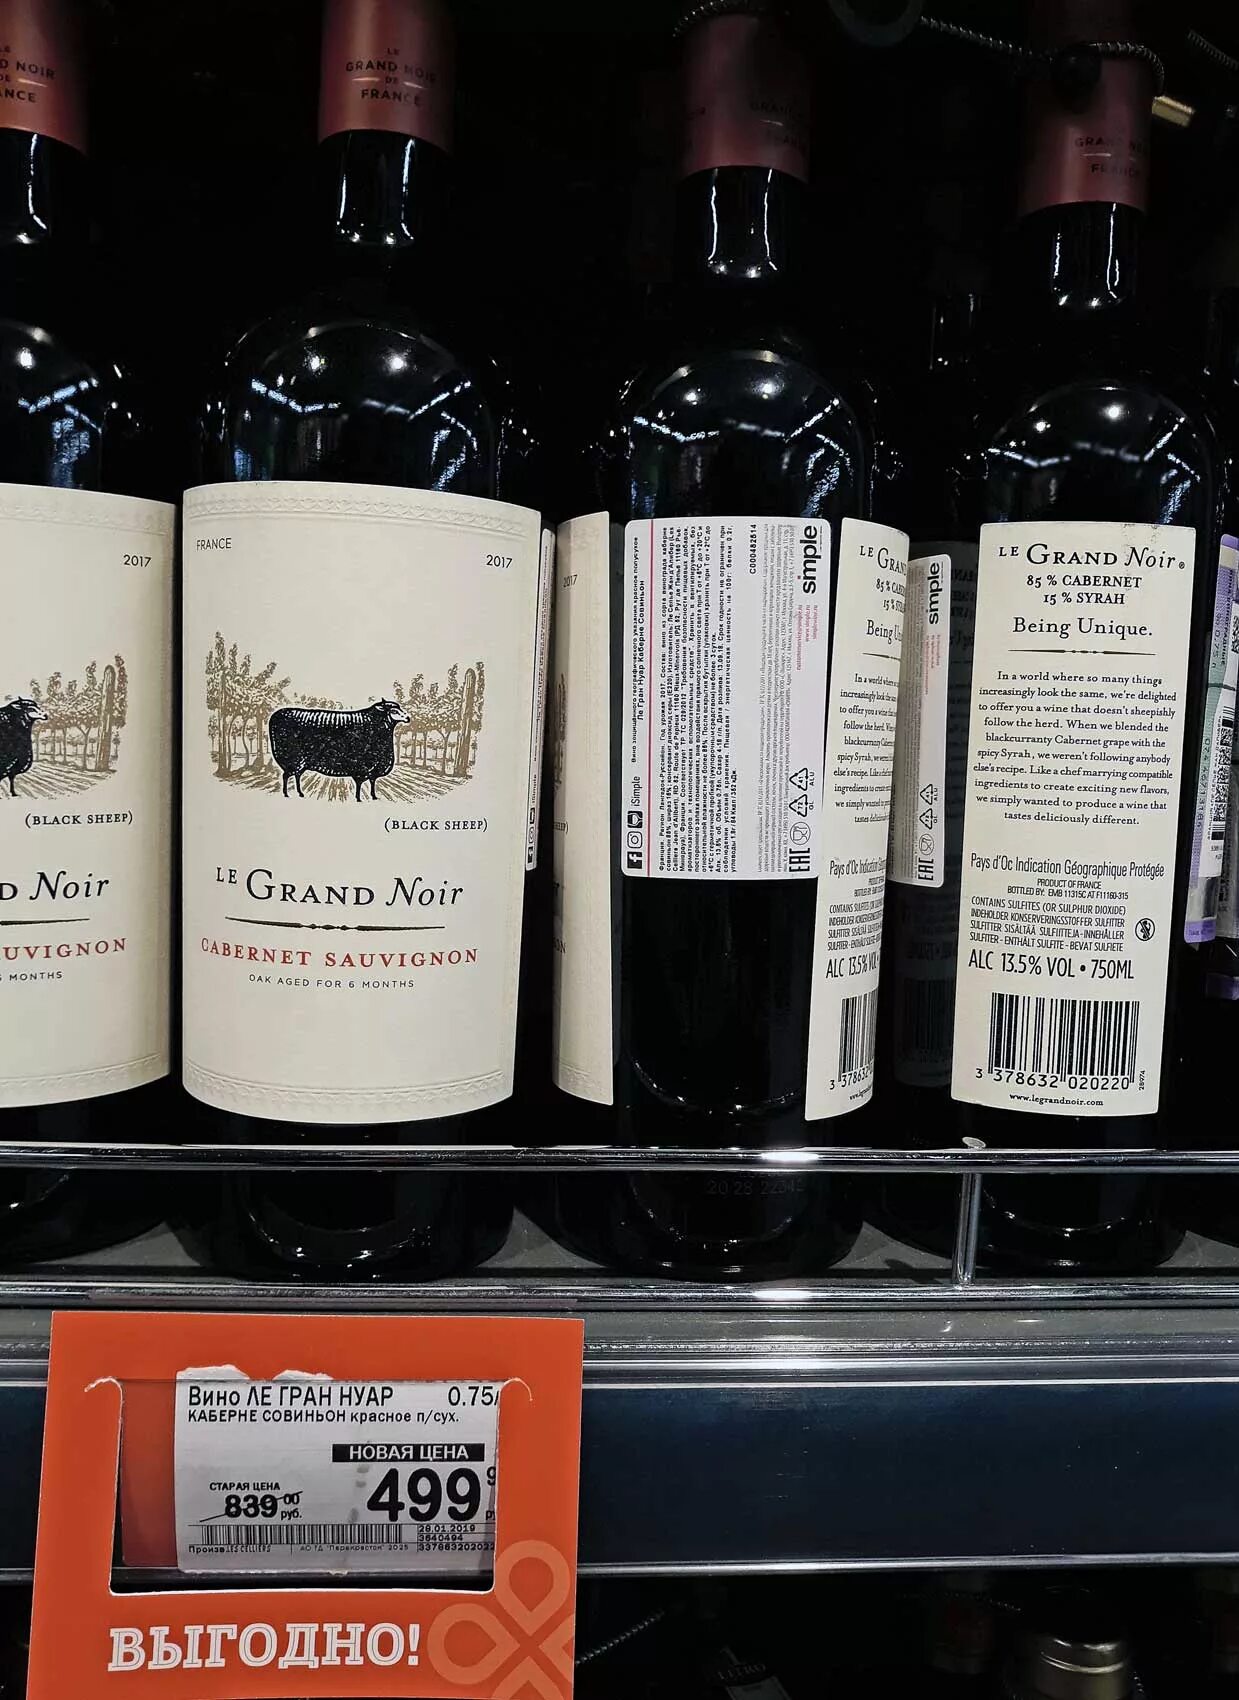 Legrand noir. Le Grand Noir Cabernet Sauvignon, полусухое красное. Вино Легран Нуар Каберне Совиньон. Ле Гранд Ноир вино. Французское вино Каберне Совиньон.